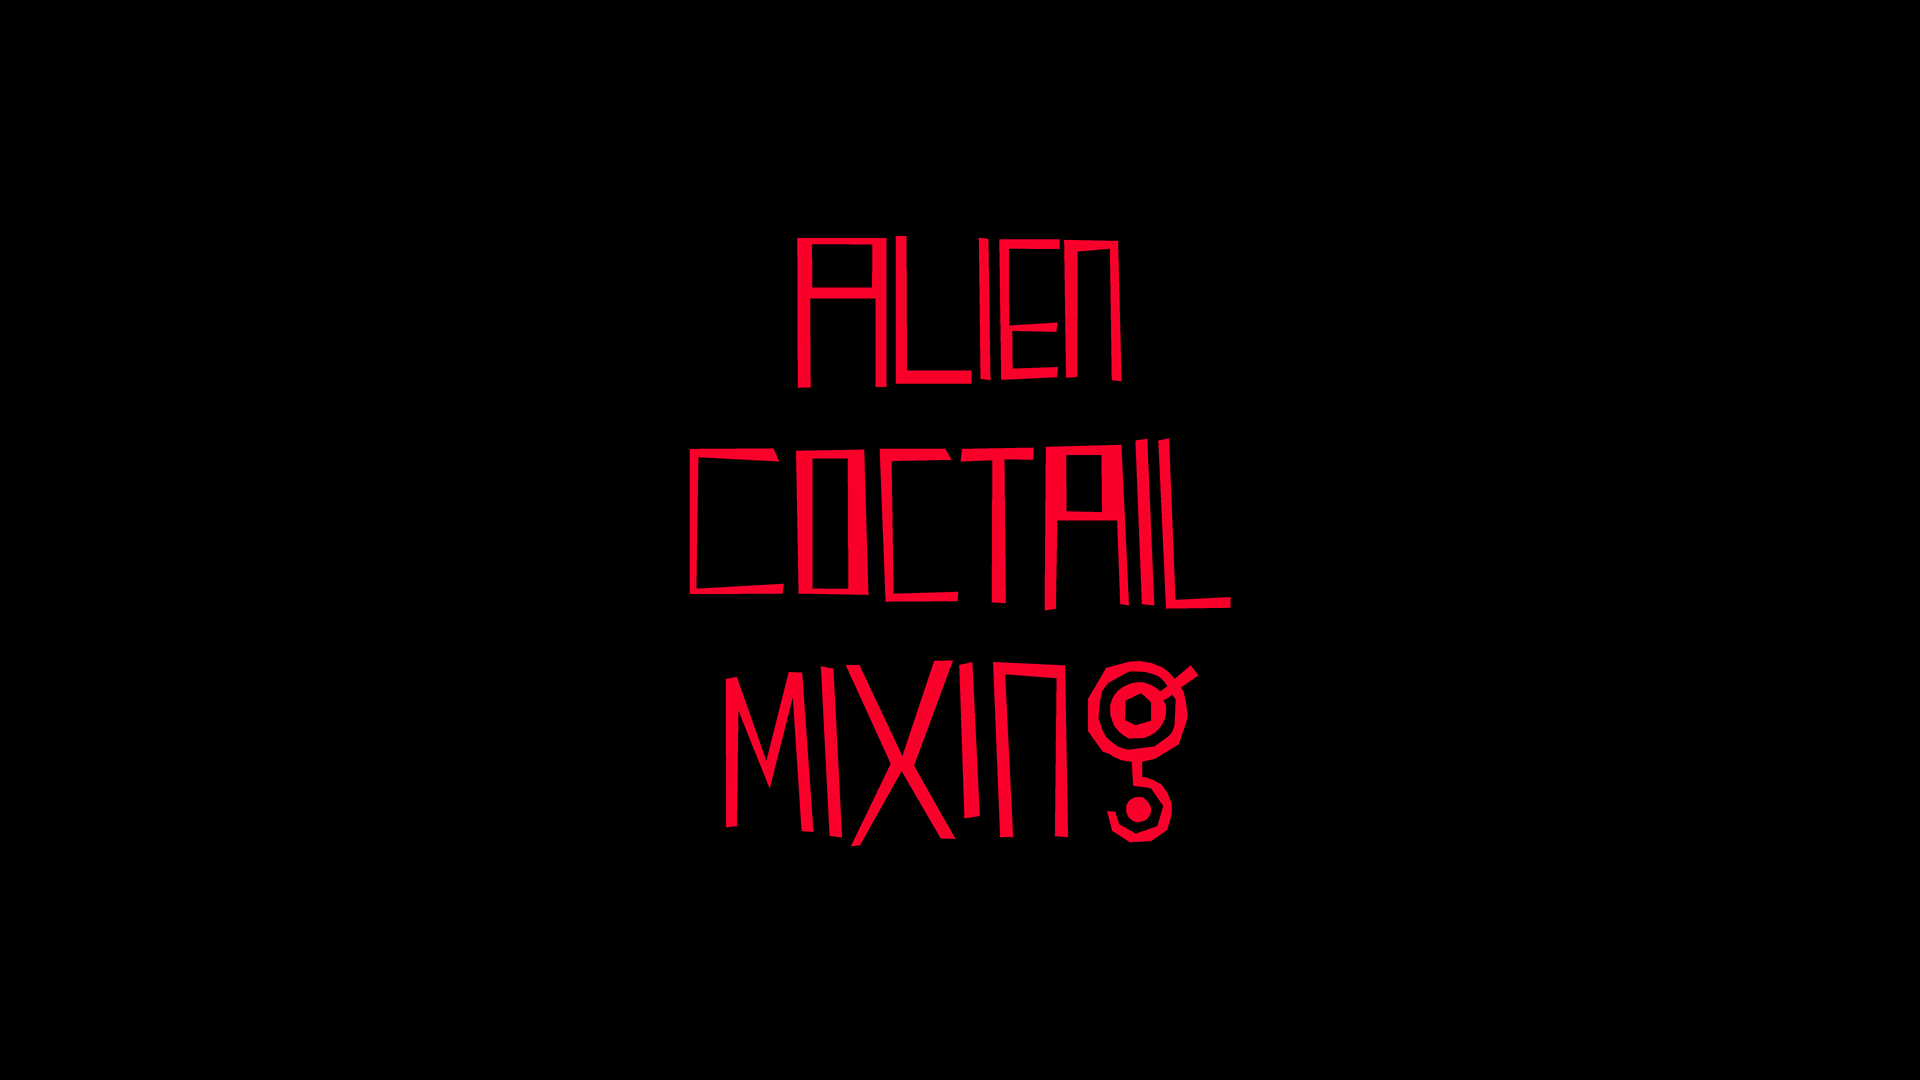 Alien Cocktail Mixing